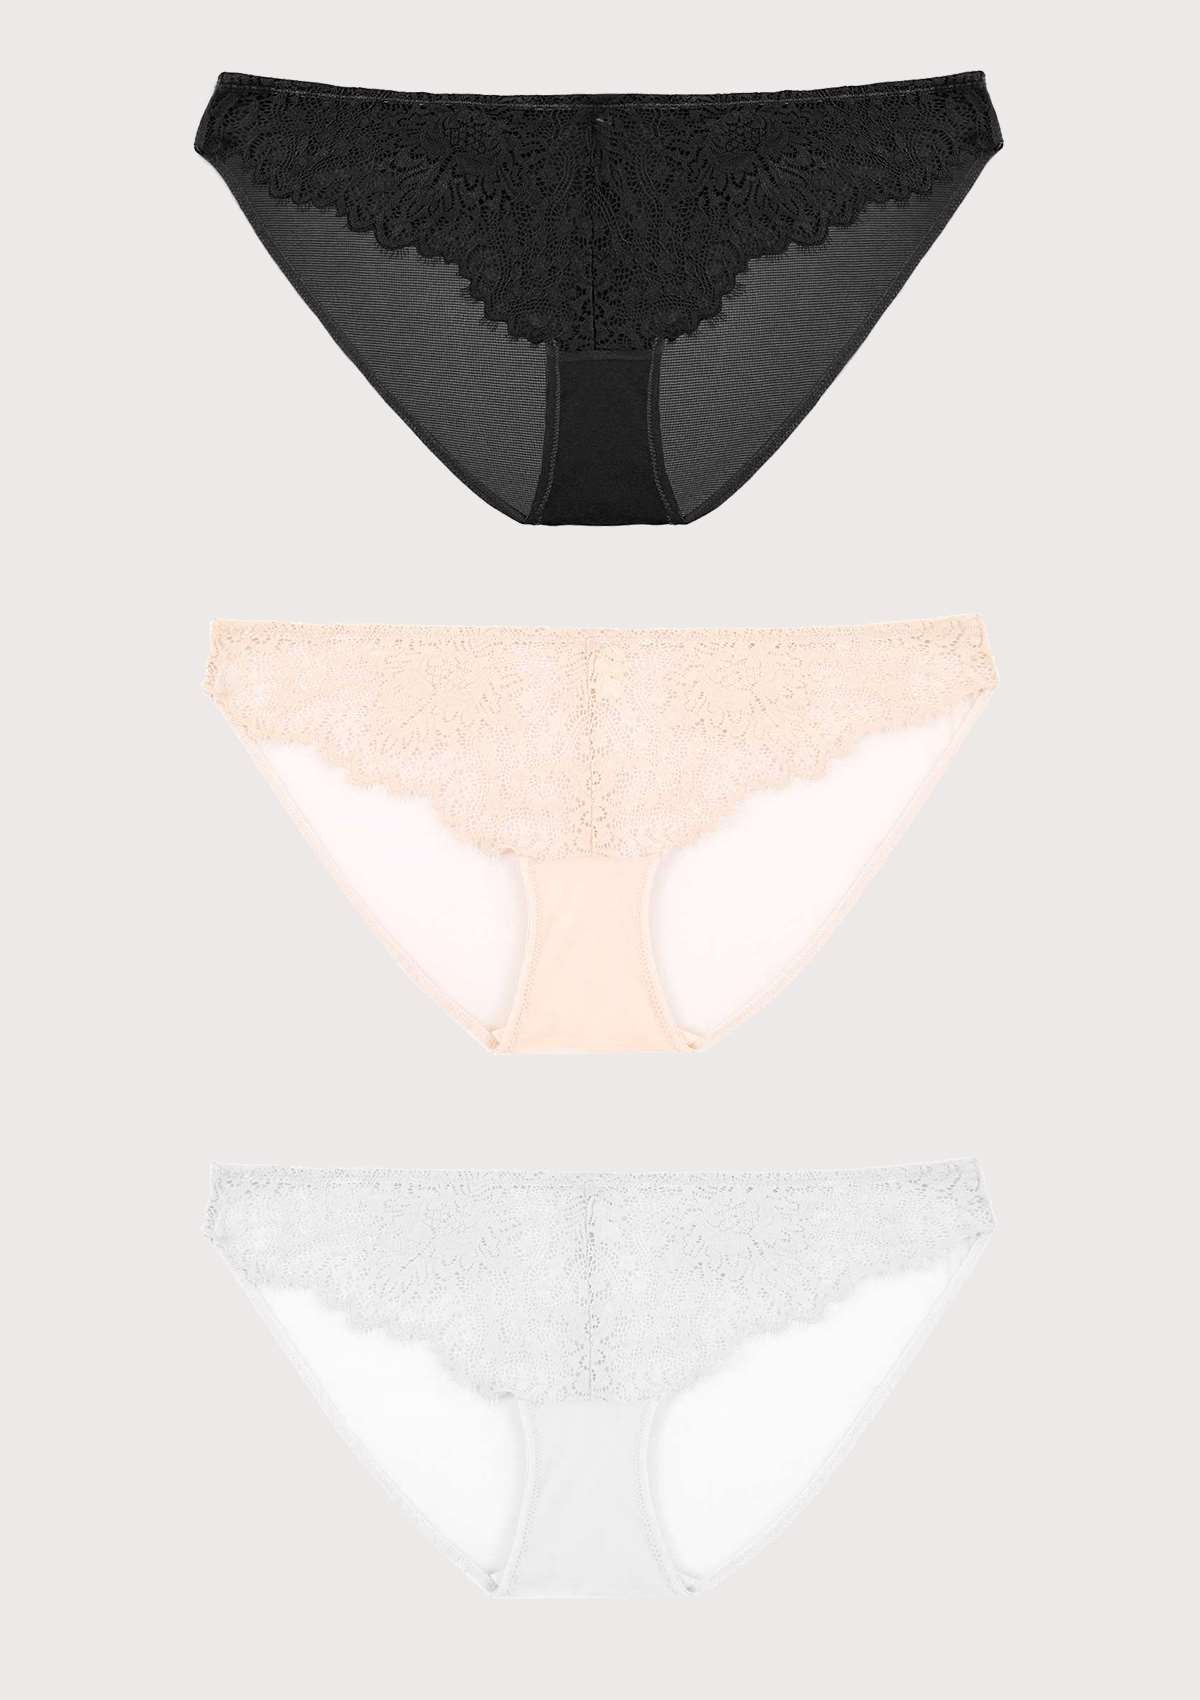 HSIA Sunflower Exquisite Lighweight Soft Lace Bikini Panties 3 Pack - XXL / Black+White+Pink